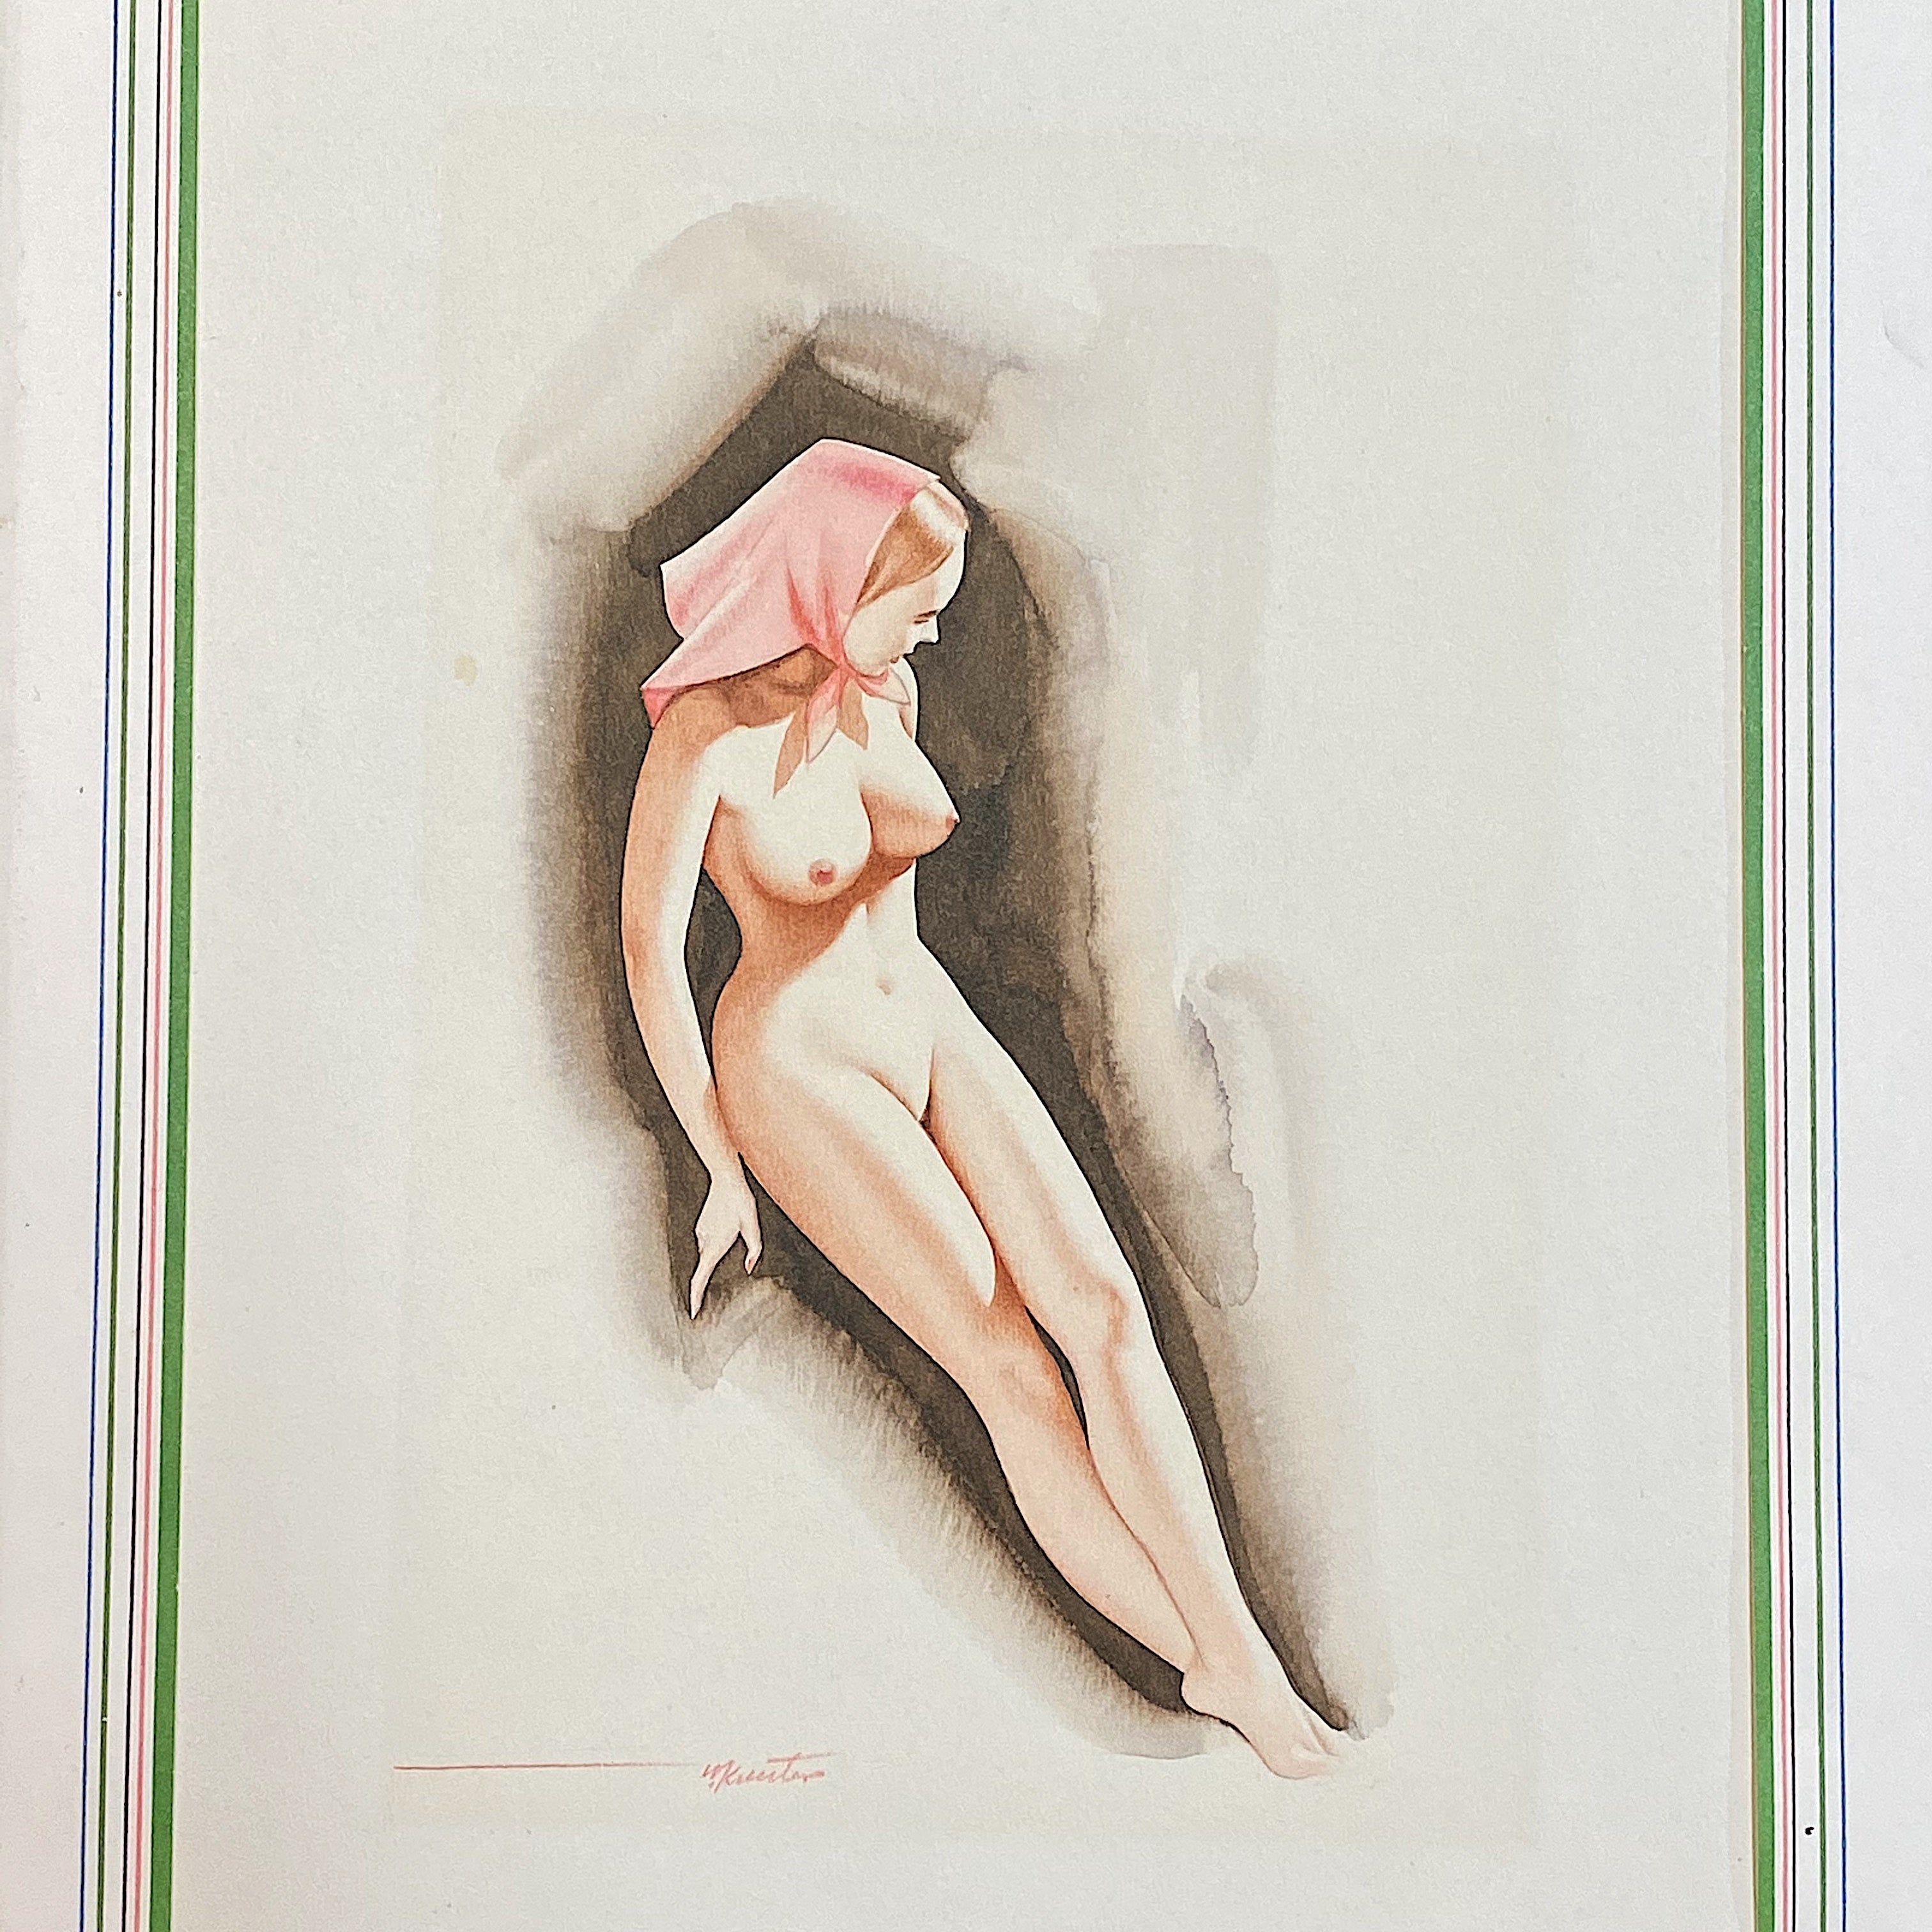 Warner Kreuter Pinup Nude Artwork - 1950s? - Pastel on Paper - Signed by Listed Artist - Wisconsin Illustration Artist - Painting